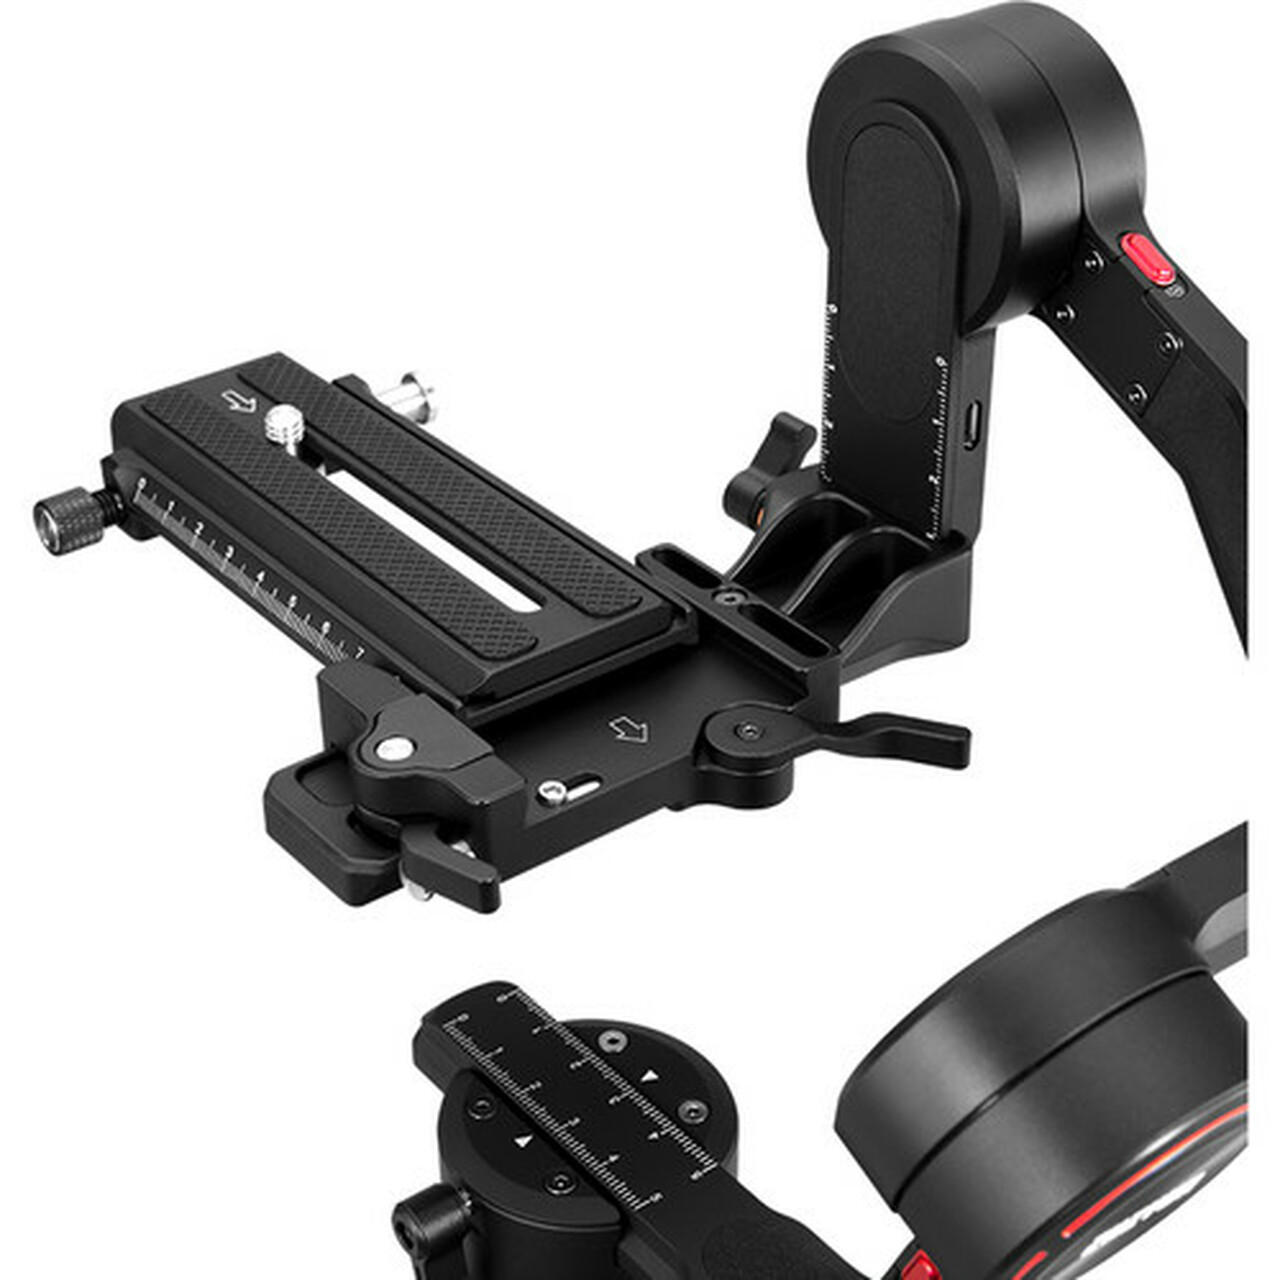 Zhiyun Weebill S 3-Axis Camera Gimbal stabilizer (NZ stock) - Kiwi Grab